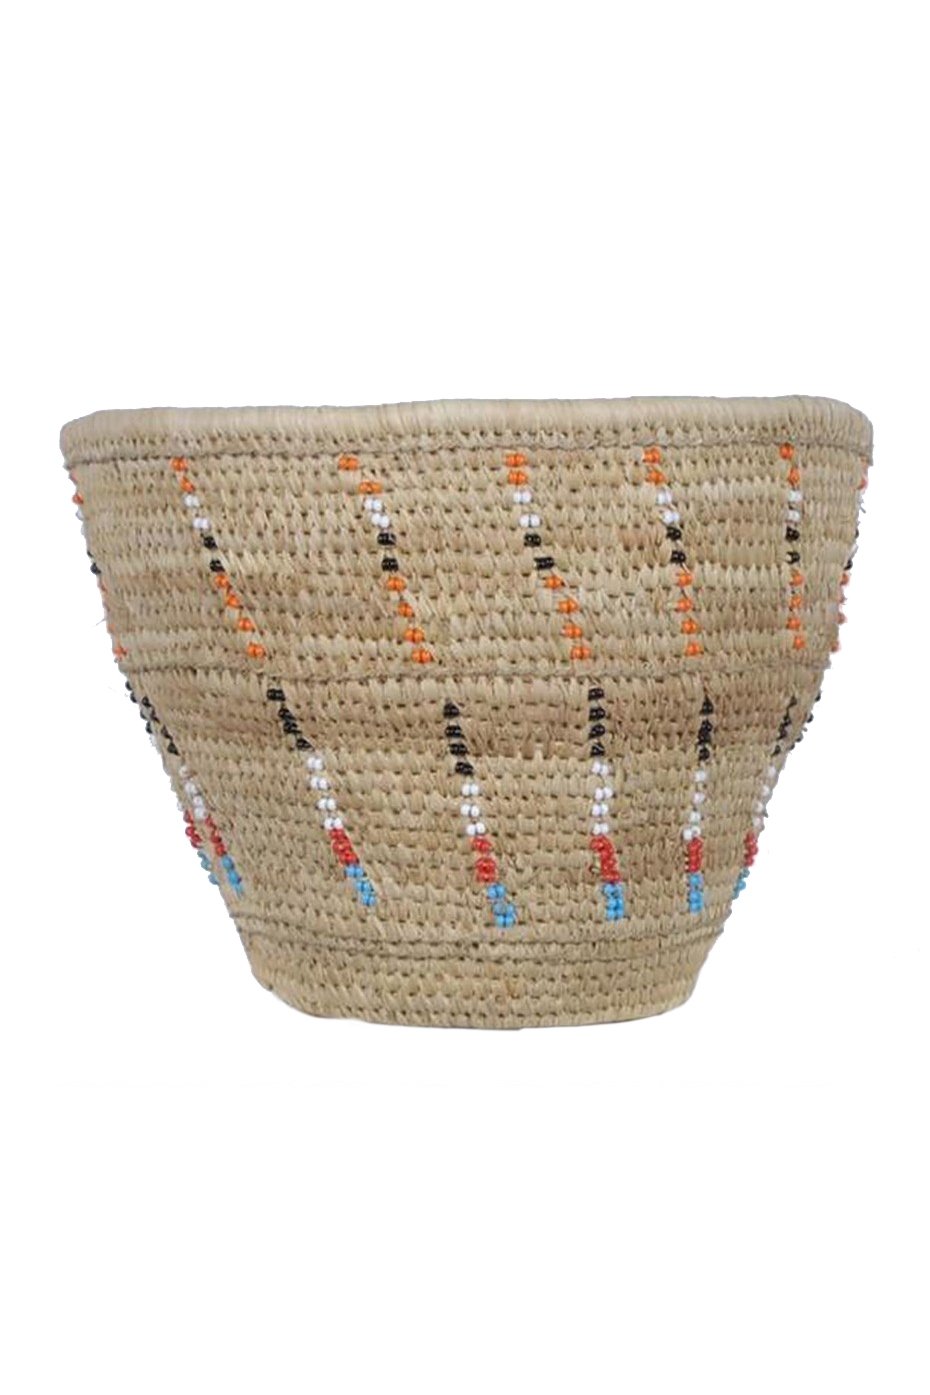 The Basket Room Shayiri Unique Beaded Pambo Planter